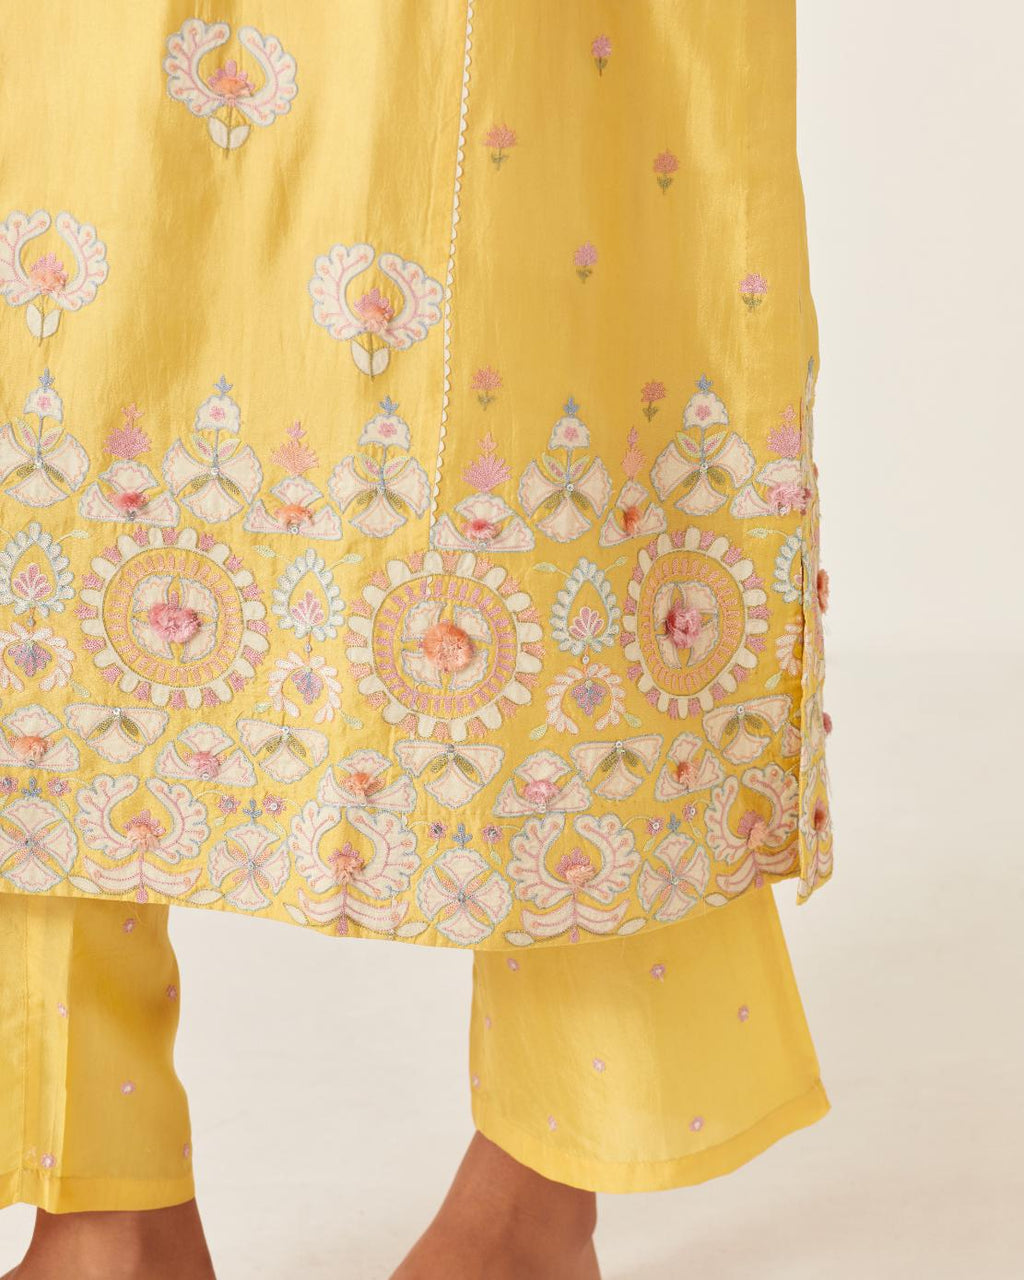 Yellow kalidar straight kurta set, fully embroidered with appliqué flowers, multi-colored aari threadwork and silk tassels.